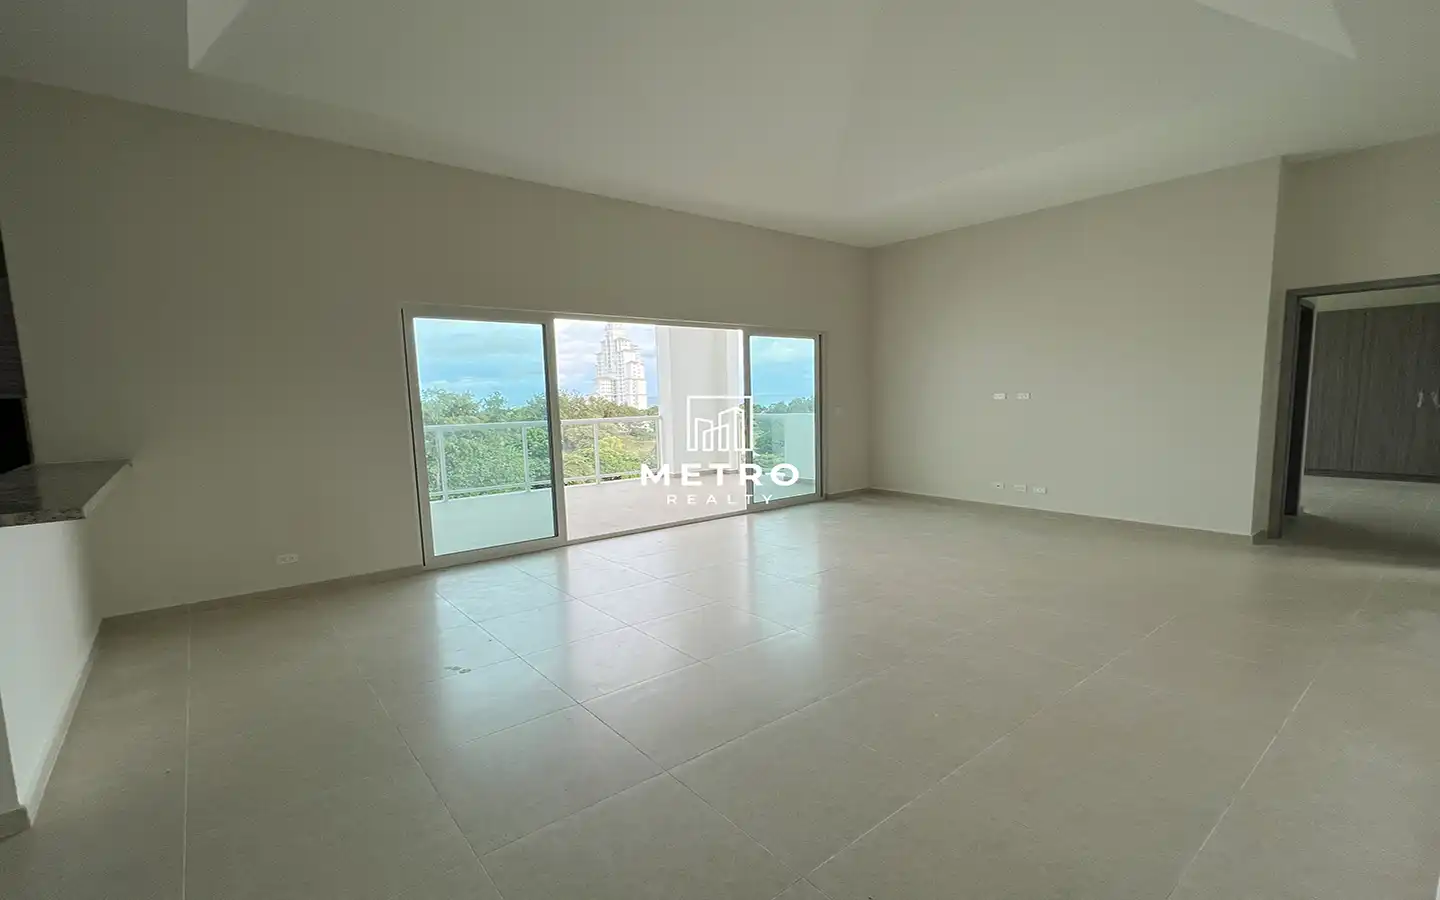 Bijao Panama Sherman Apartments living room general view